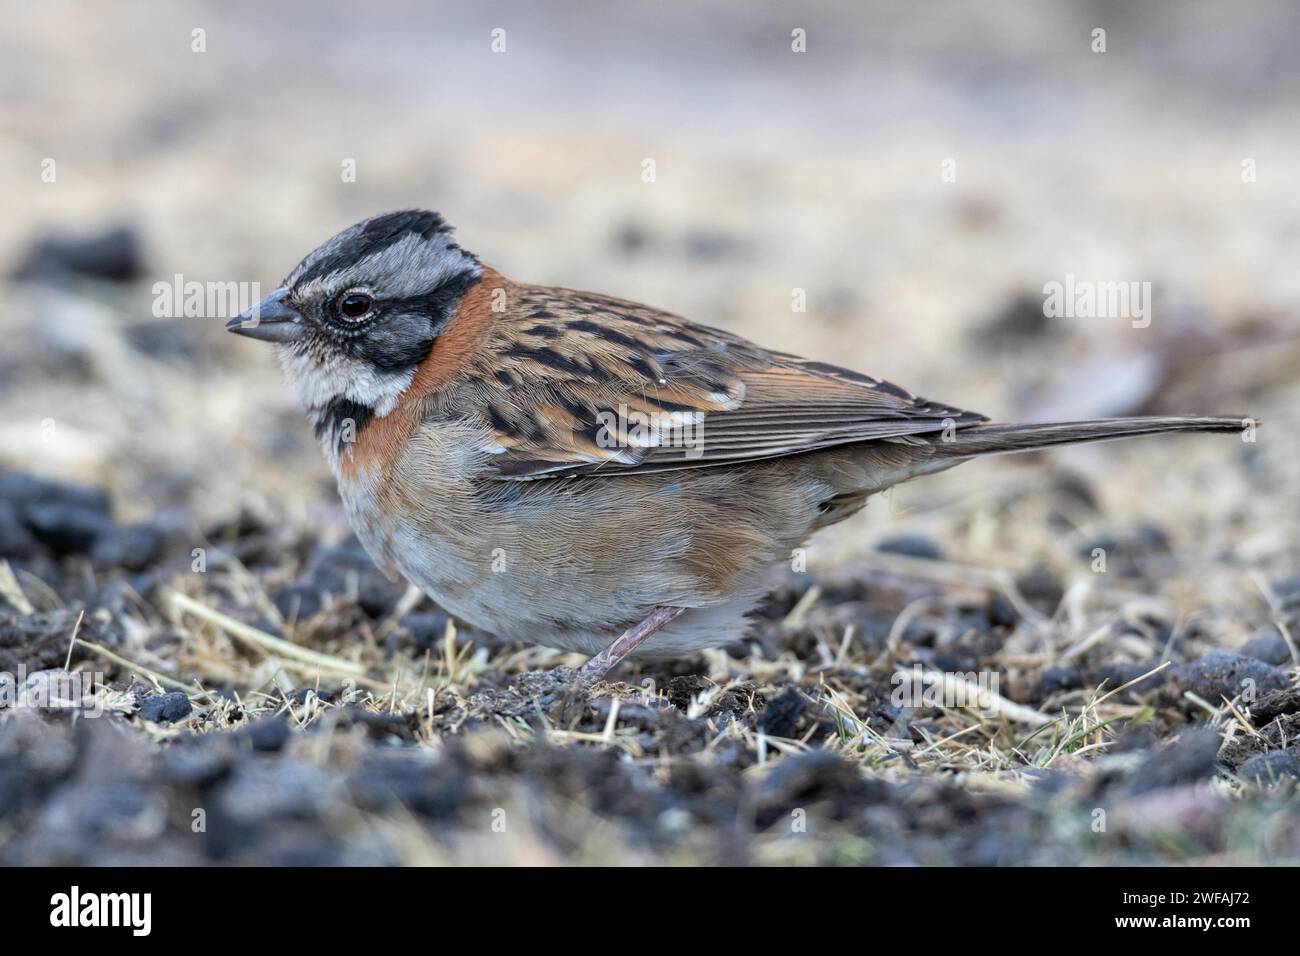 Rufous-collared sparrow Stock Photo